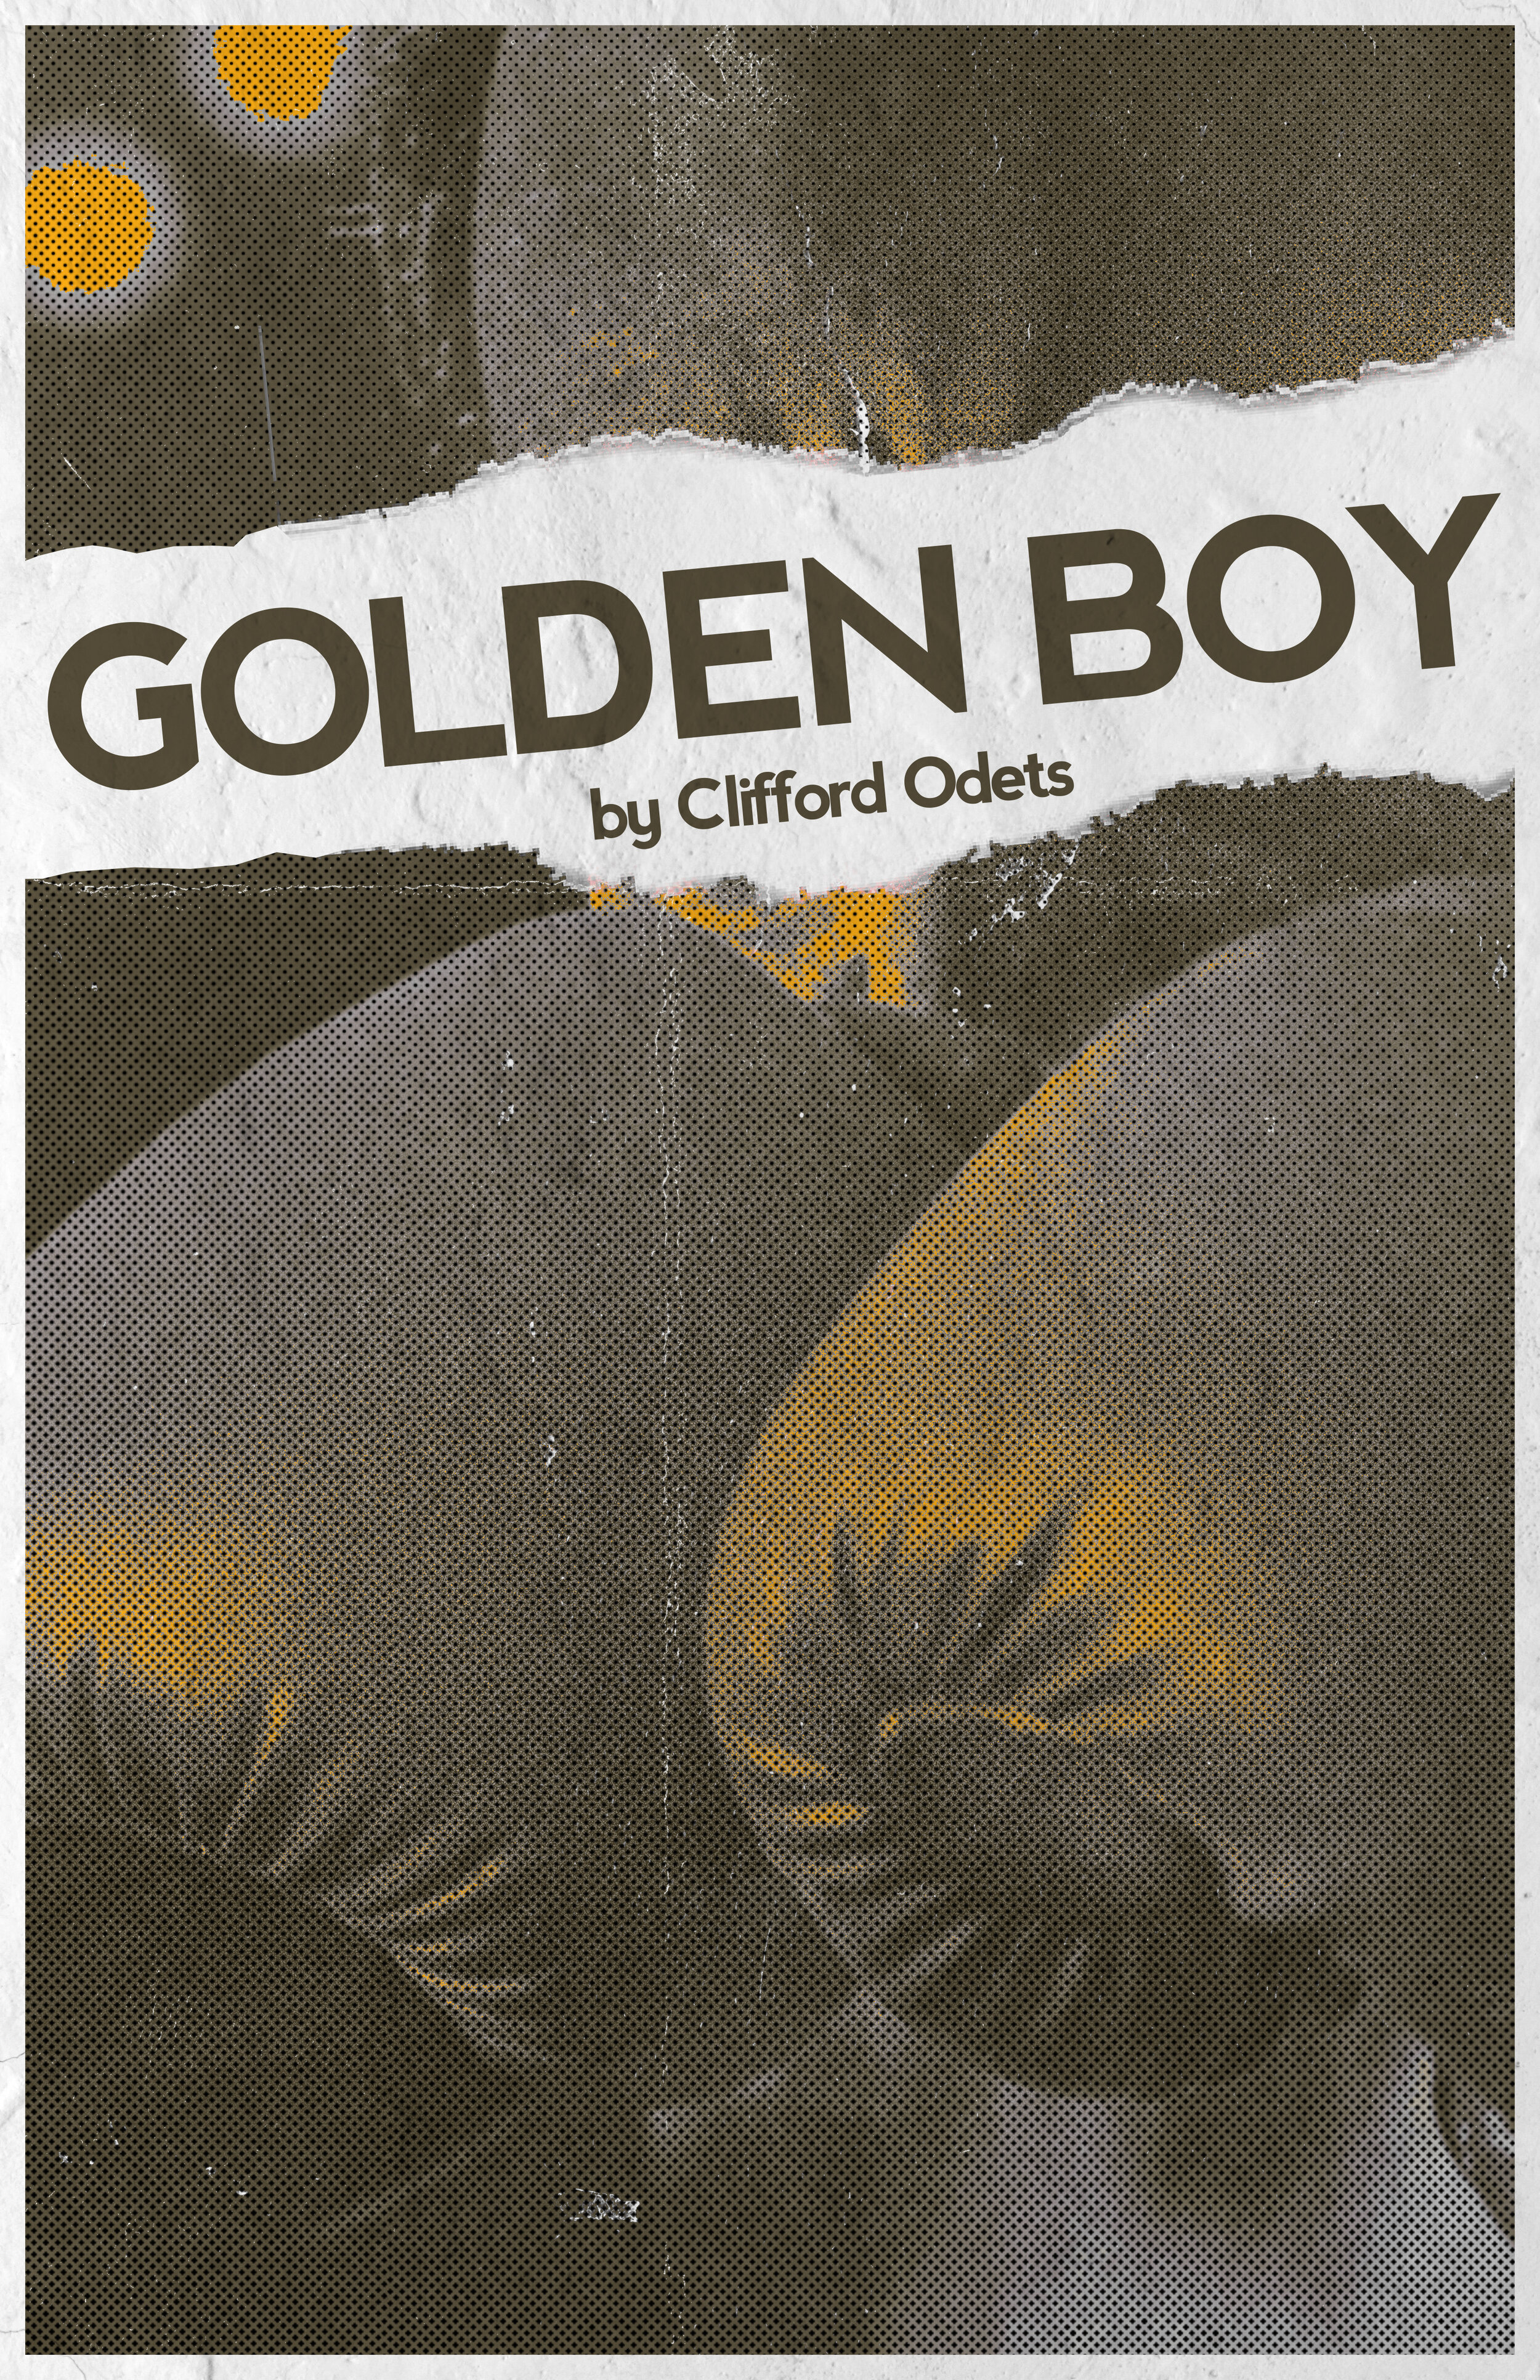 GoldenBoyPosterdraft.jpg